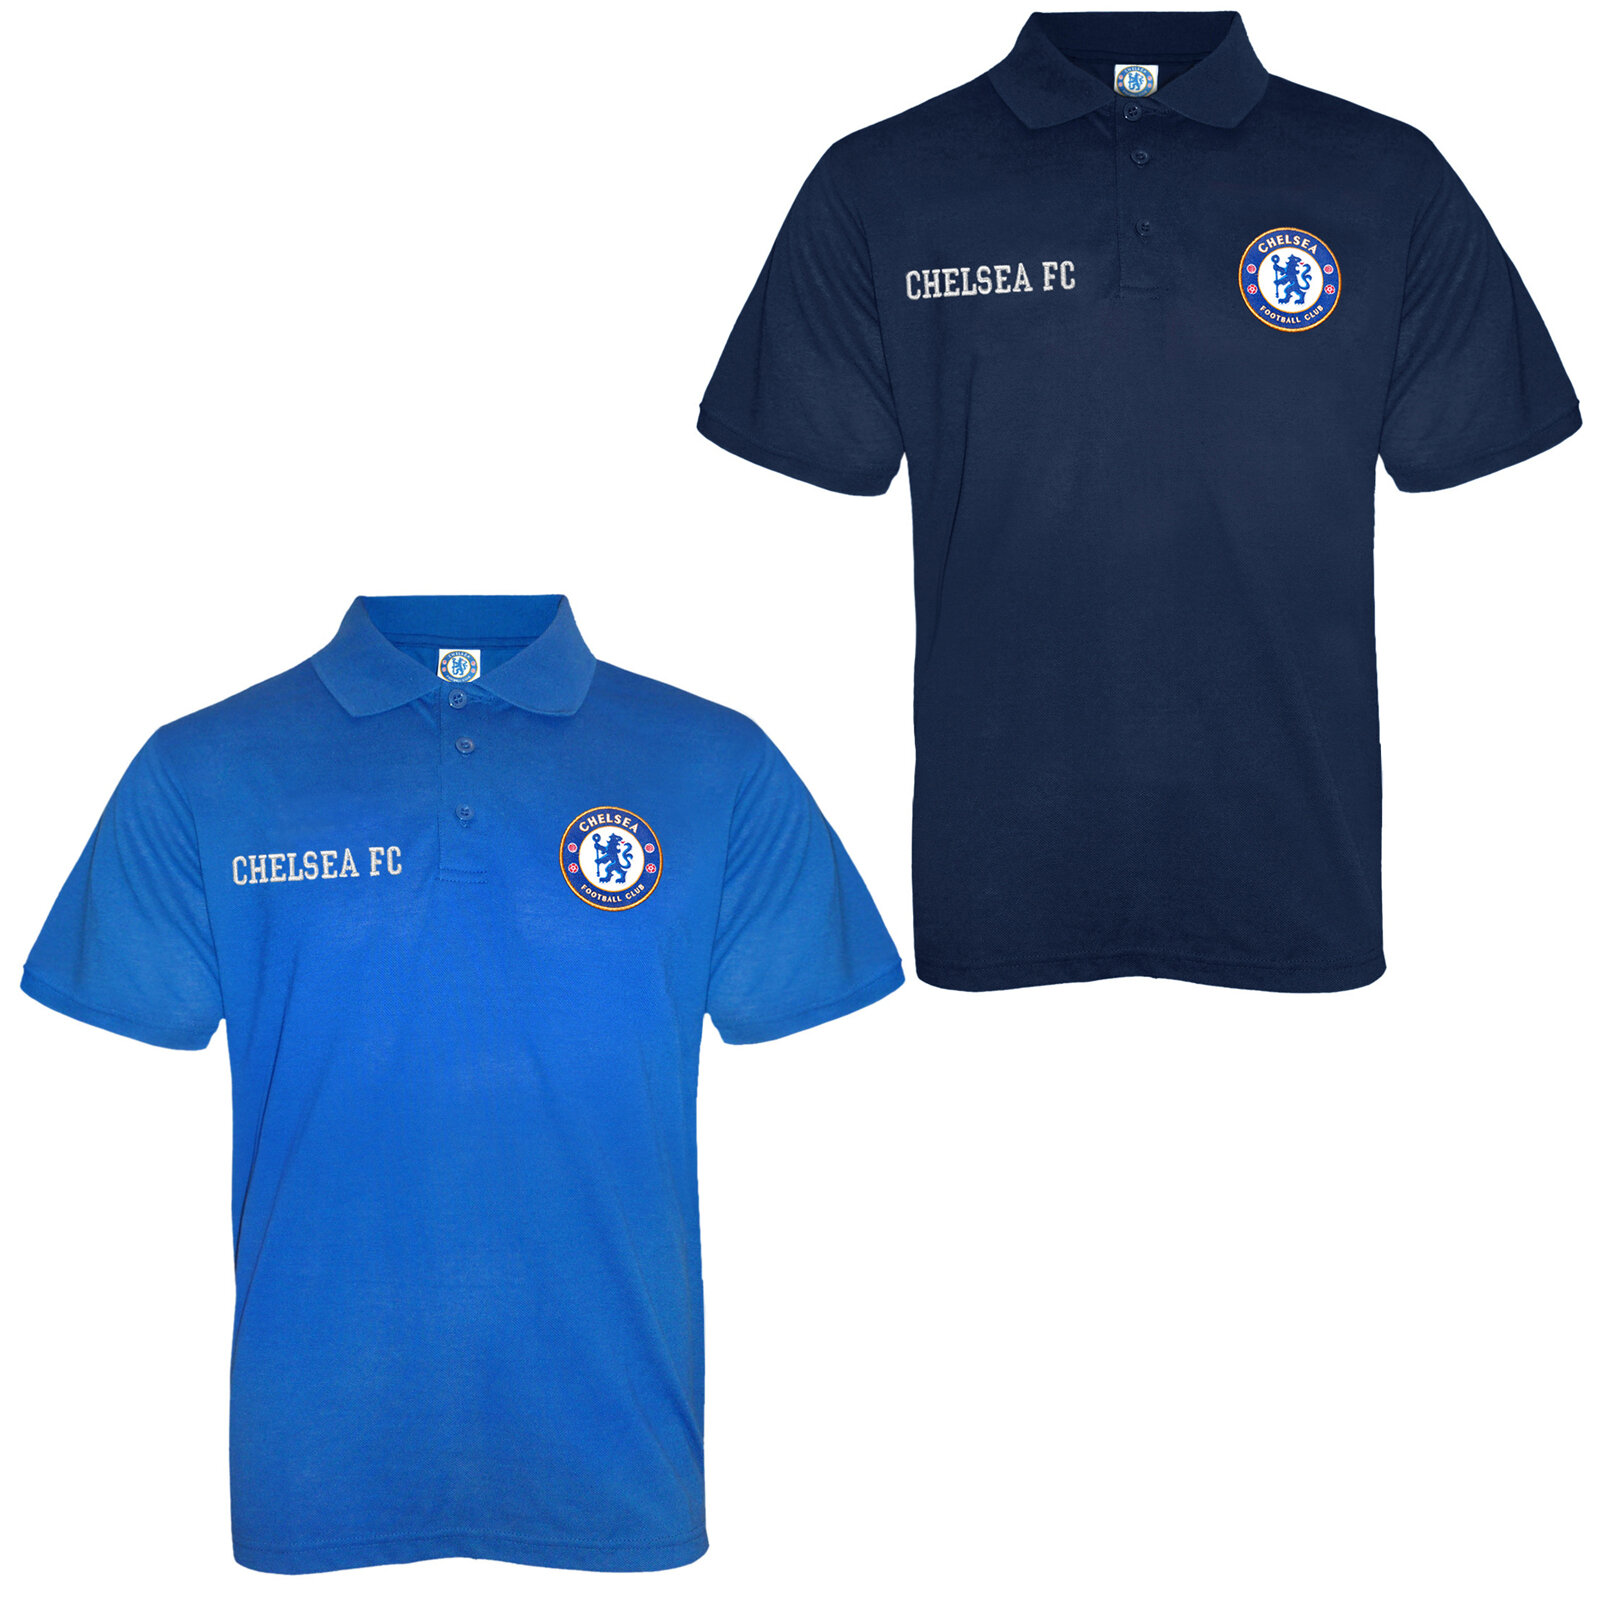 Chelsea FC Boys Polo Shirt Crest Kids OFFICIAL Football Gift